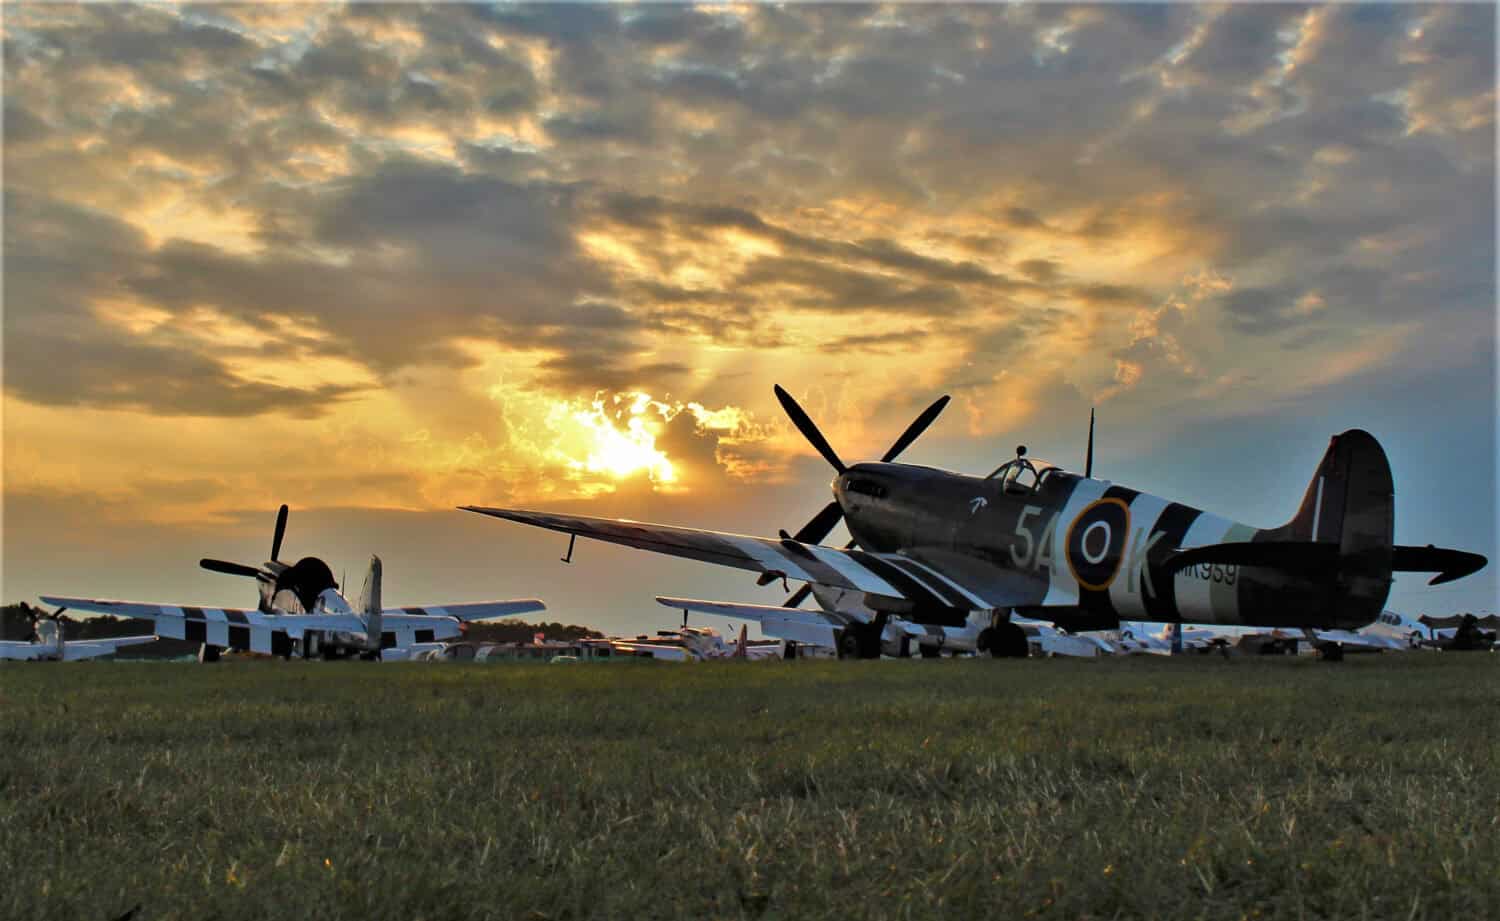 P-51 Mustang at sunset airshow